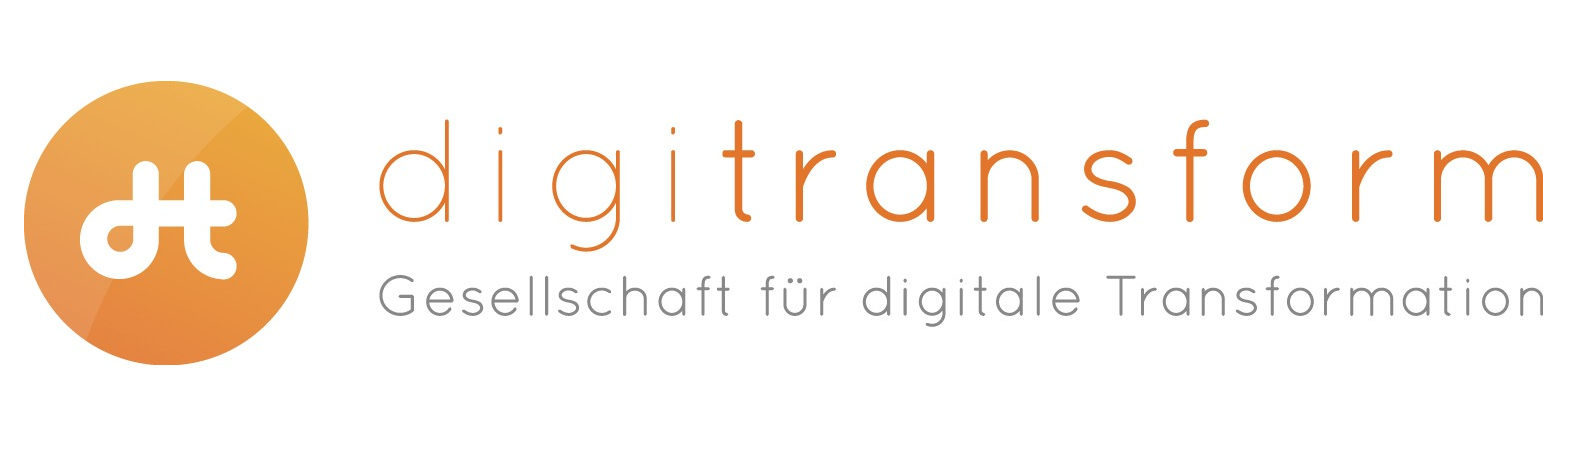 digitransform.de Gesellschaft für digitale Transformation mbH Logo